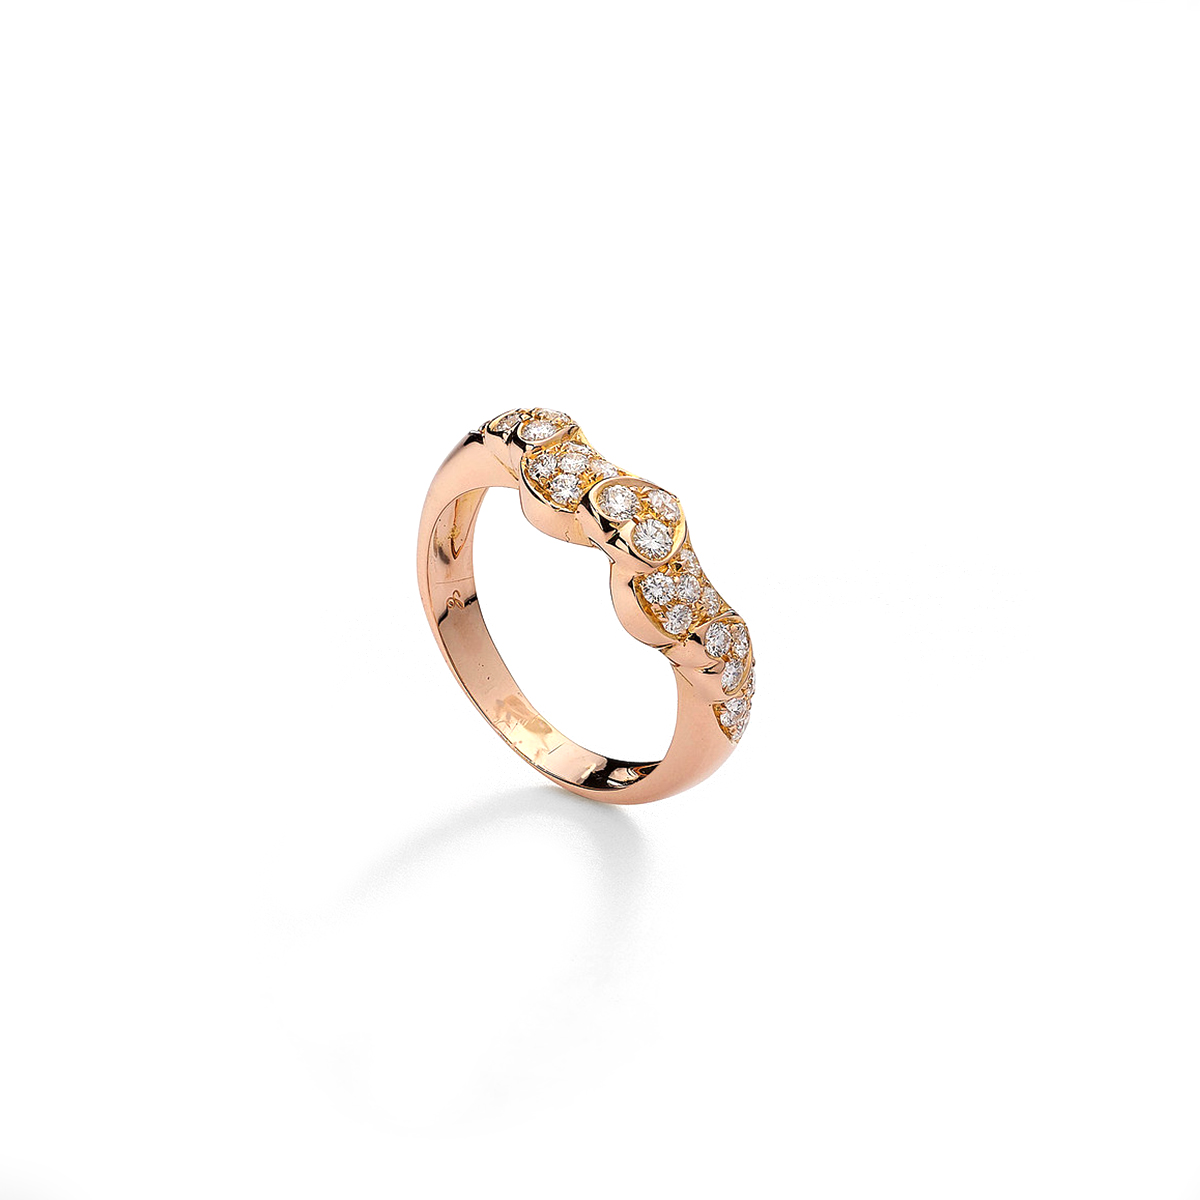 jewels-diamonds-18kt-rose-gold-ring